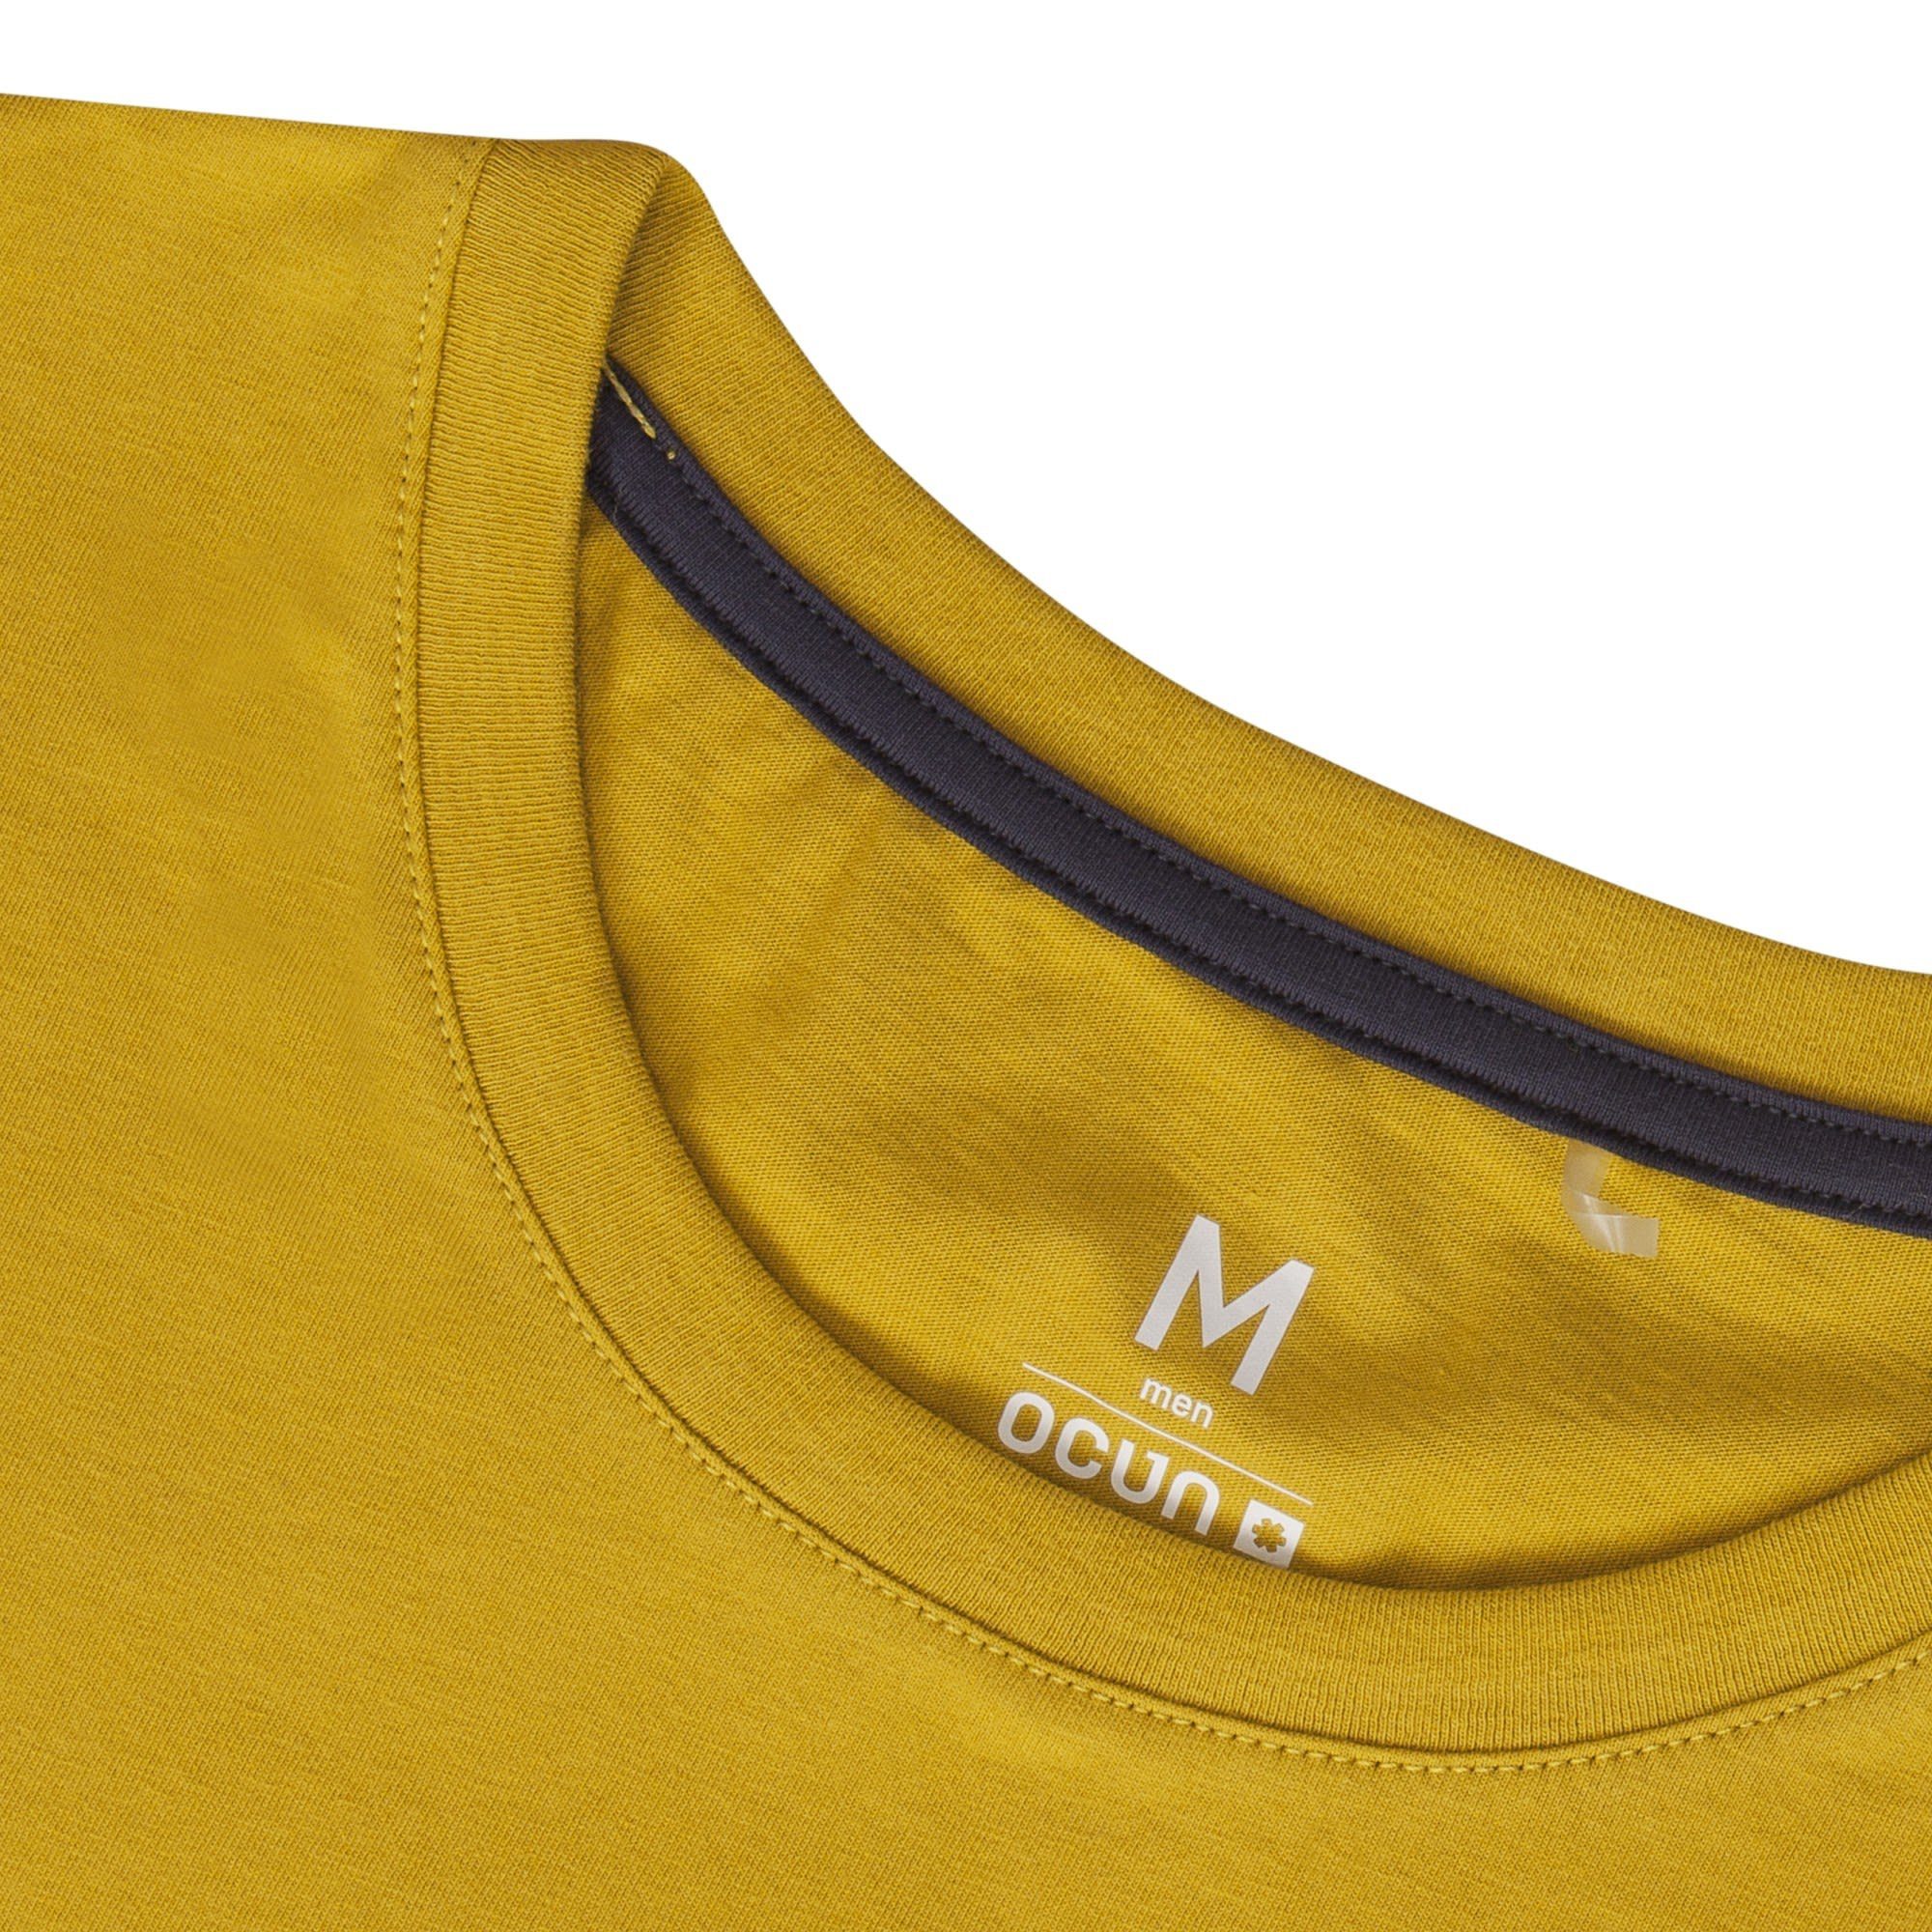 M Ocun Brown Yellow King Herren Classic T Antique Kurzarm-Shirt Ocun T-Shirt